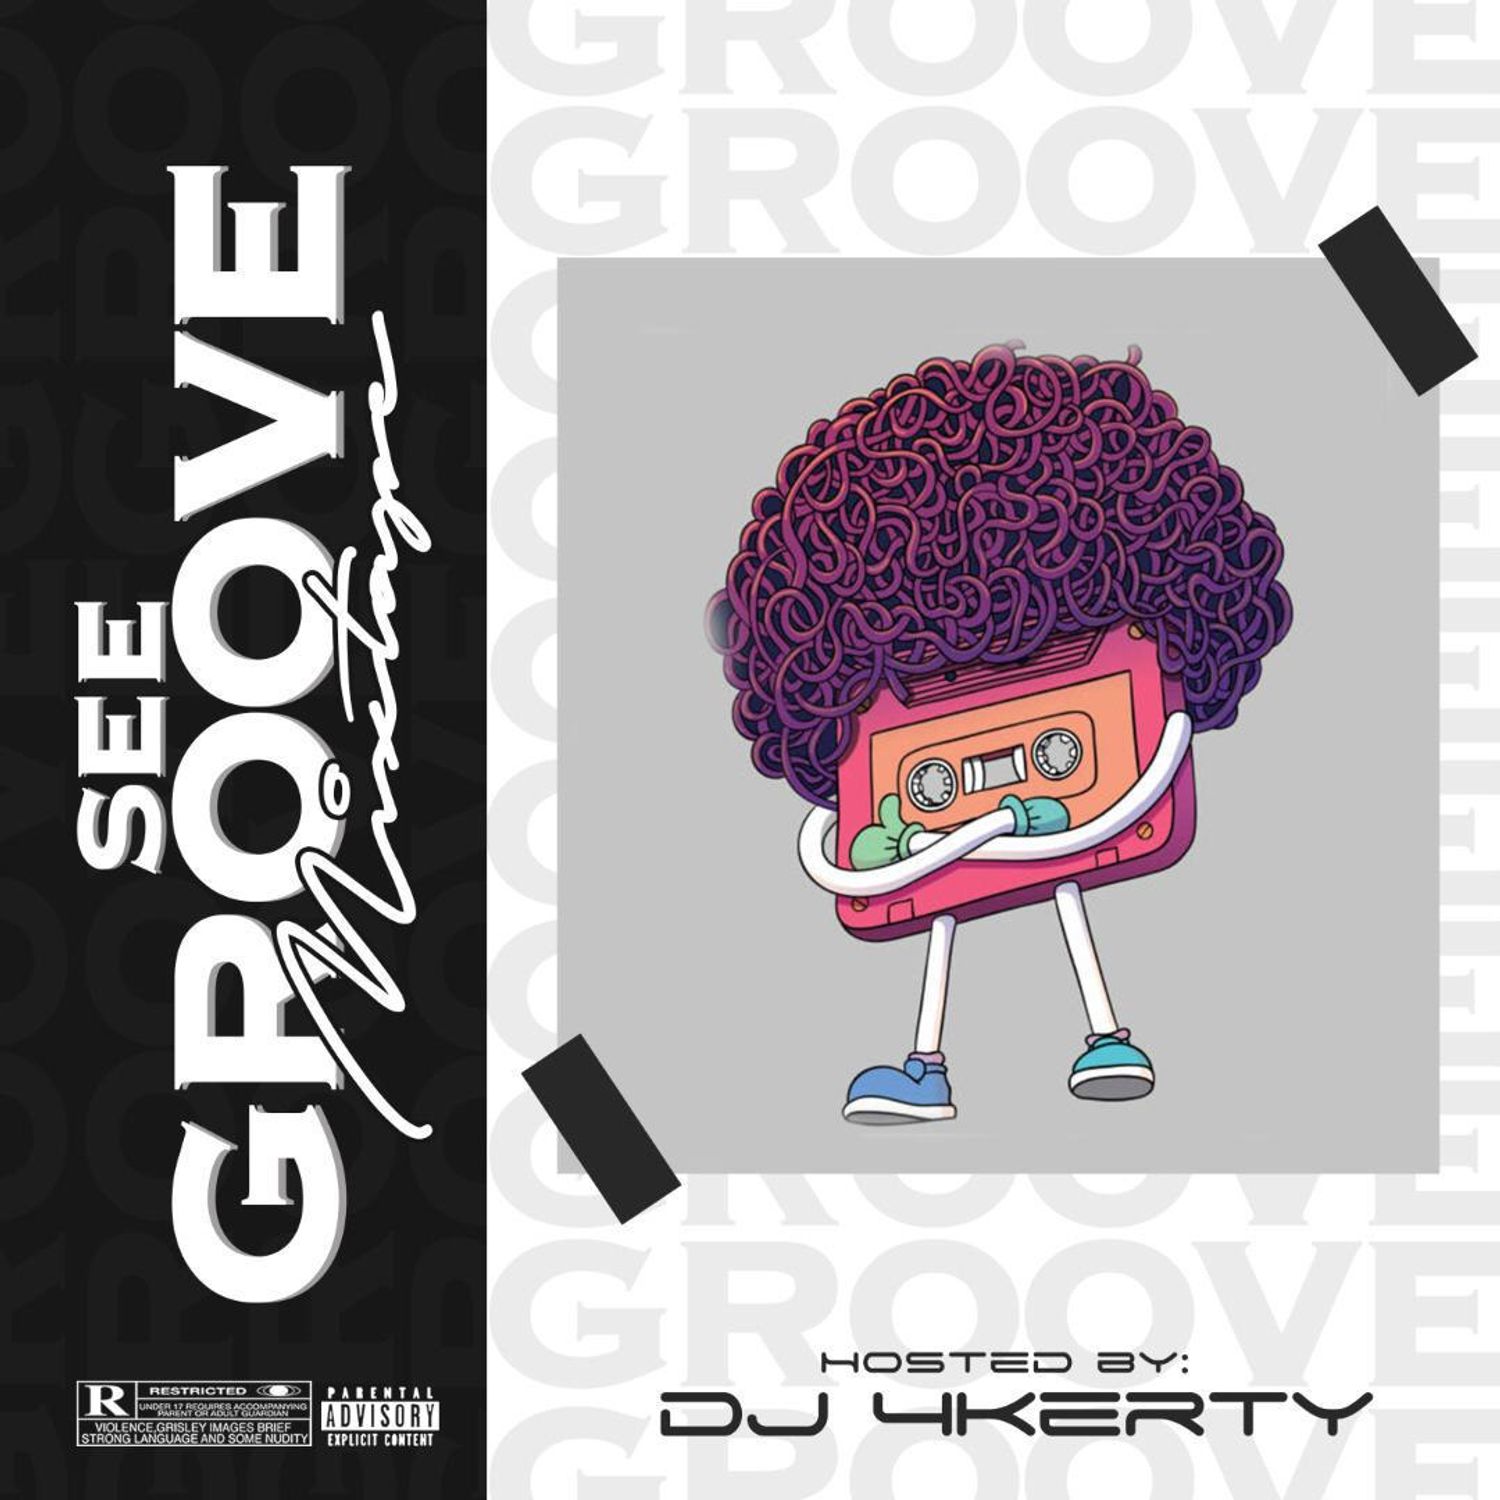 DJ 4kerty - See Groove Mixtape   Mp3 Download lyrics